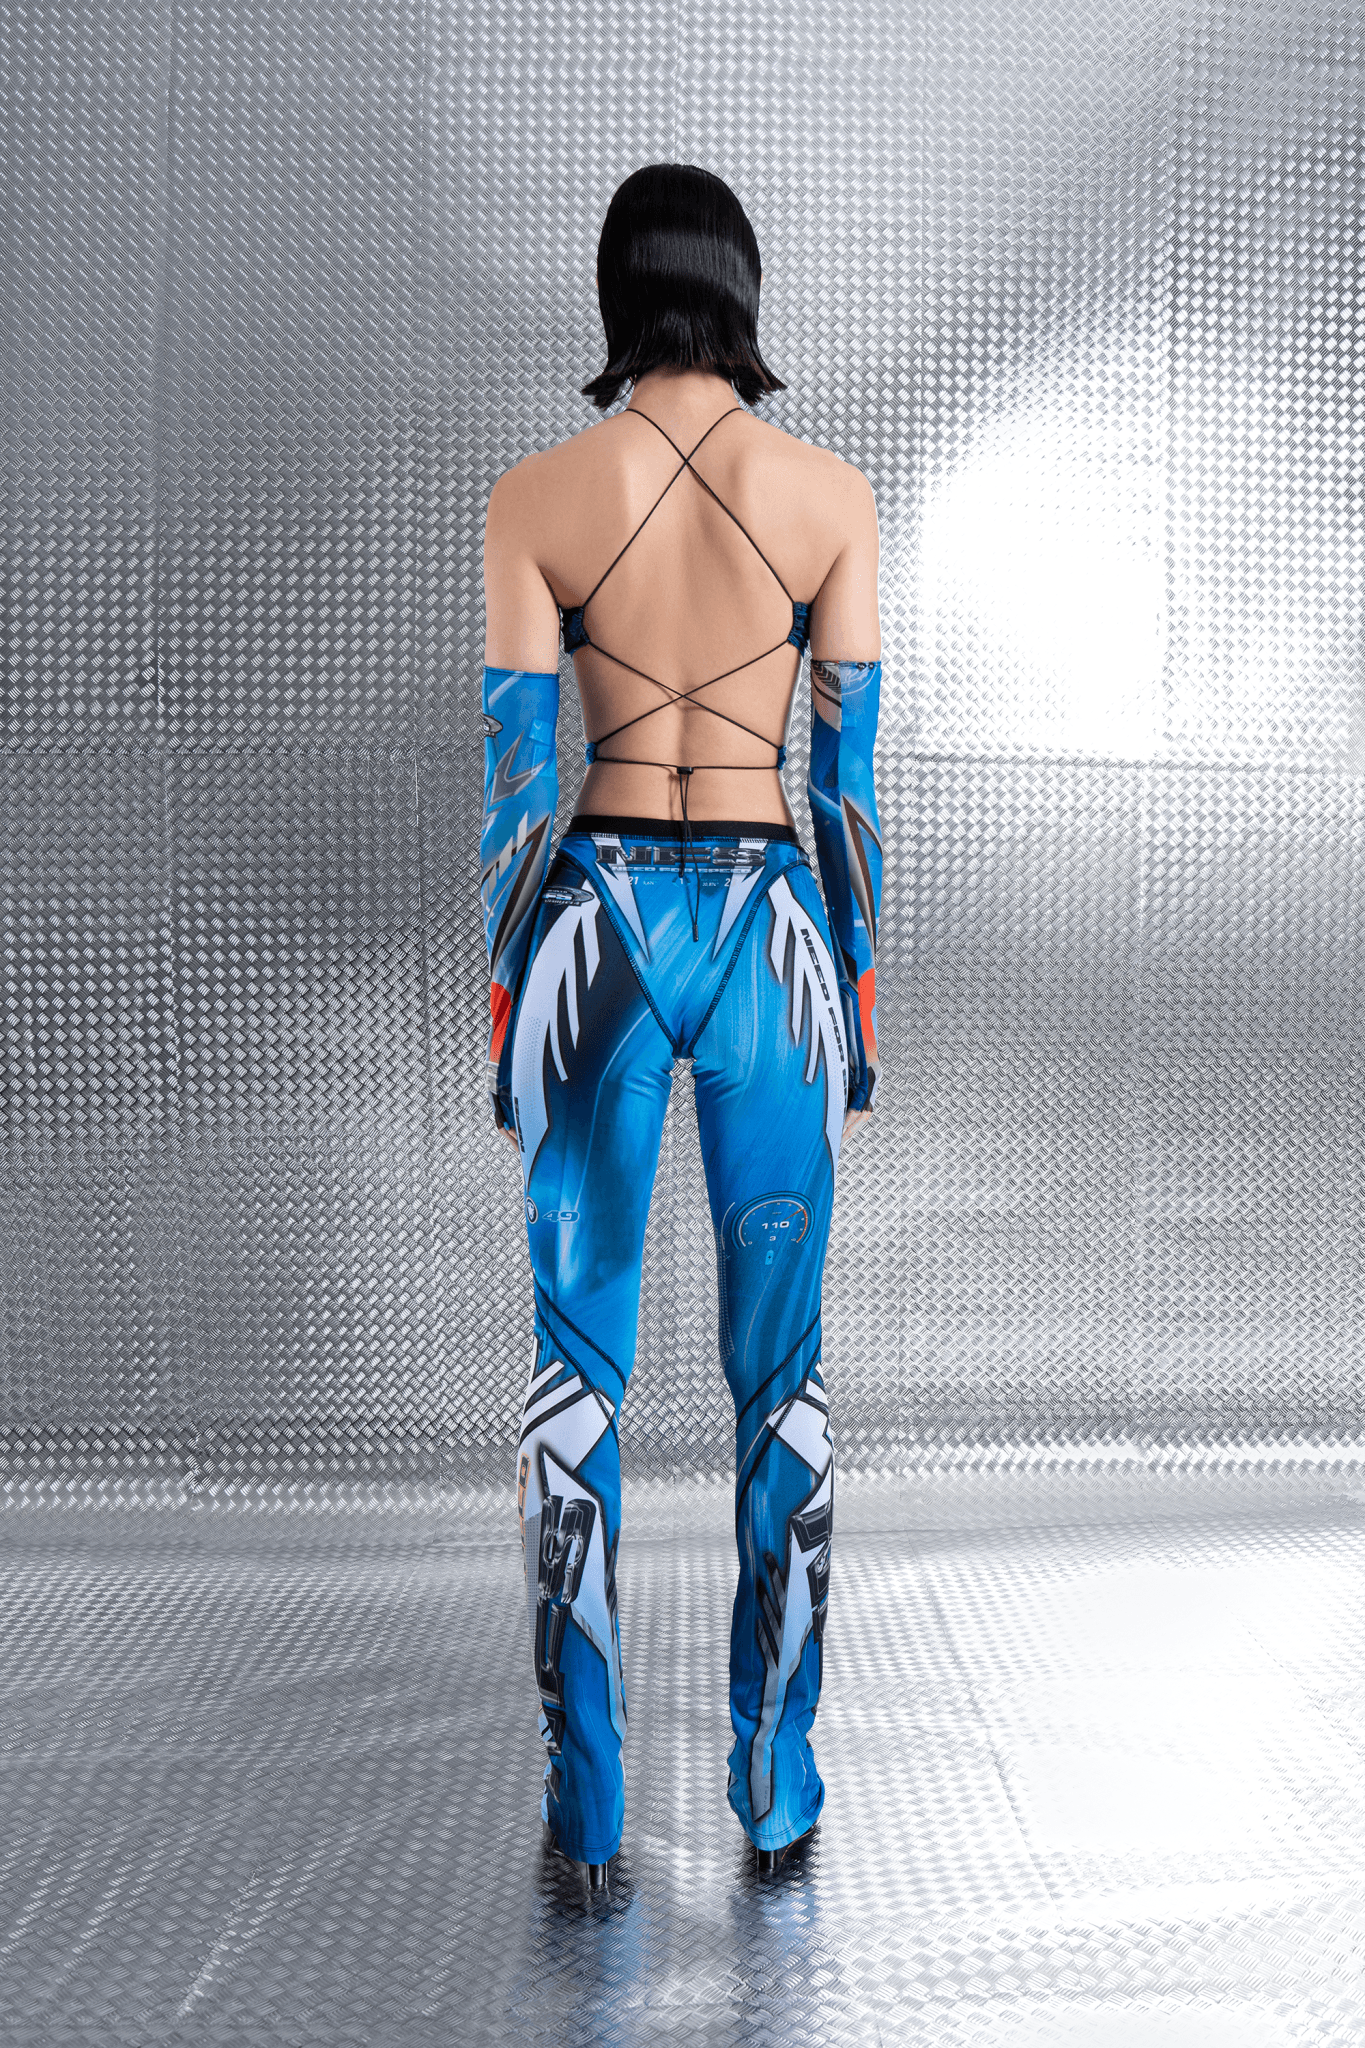 NAMILIA namilia x nfs transformer stretch pants - XS, blue